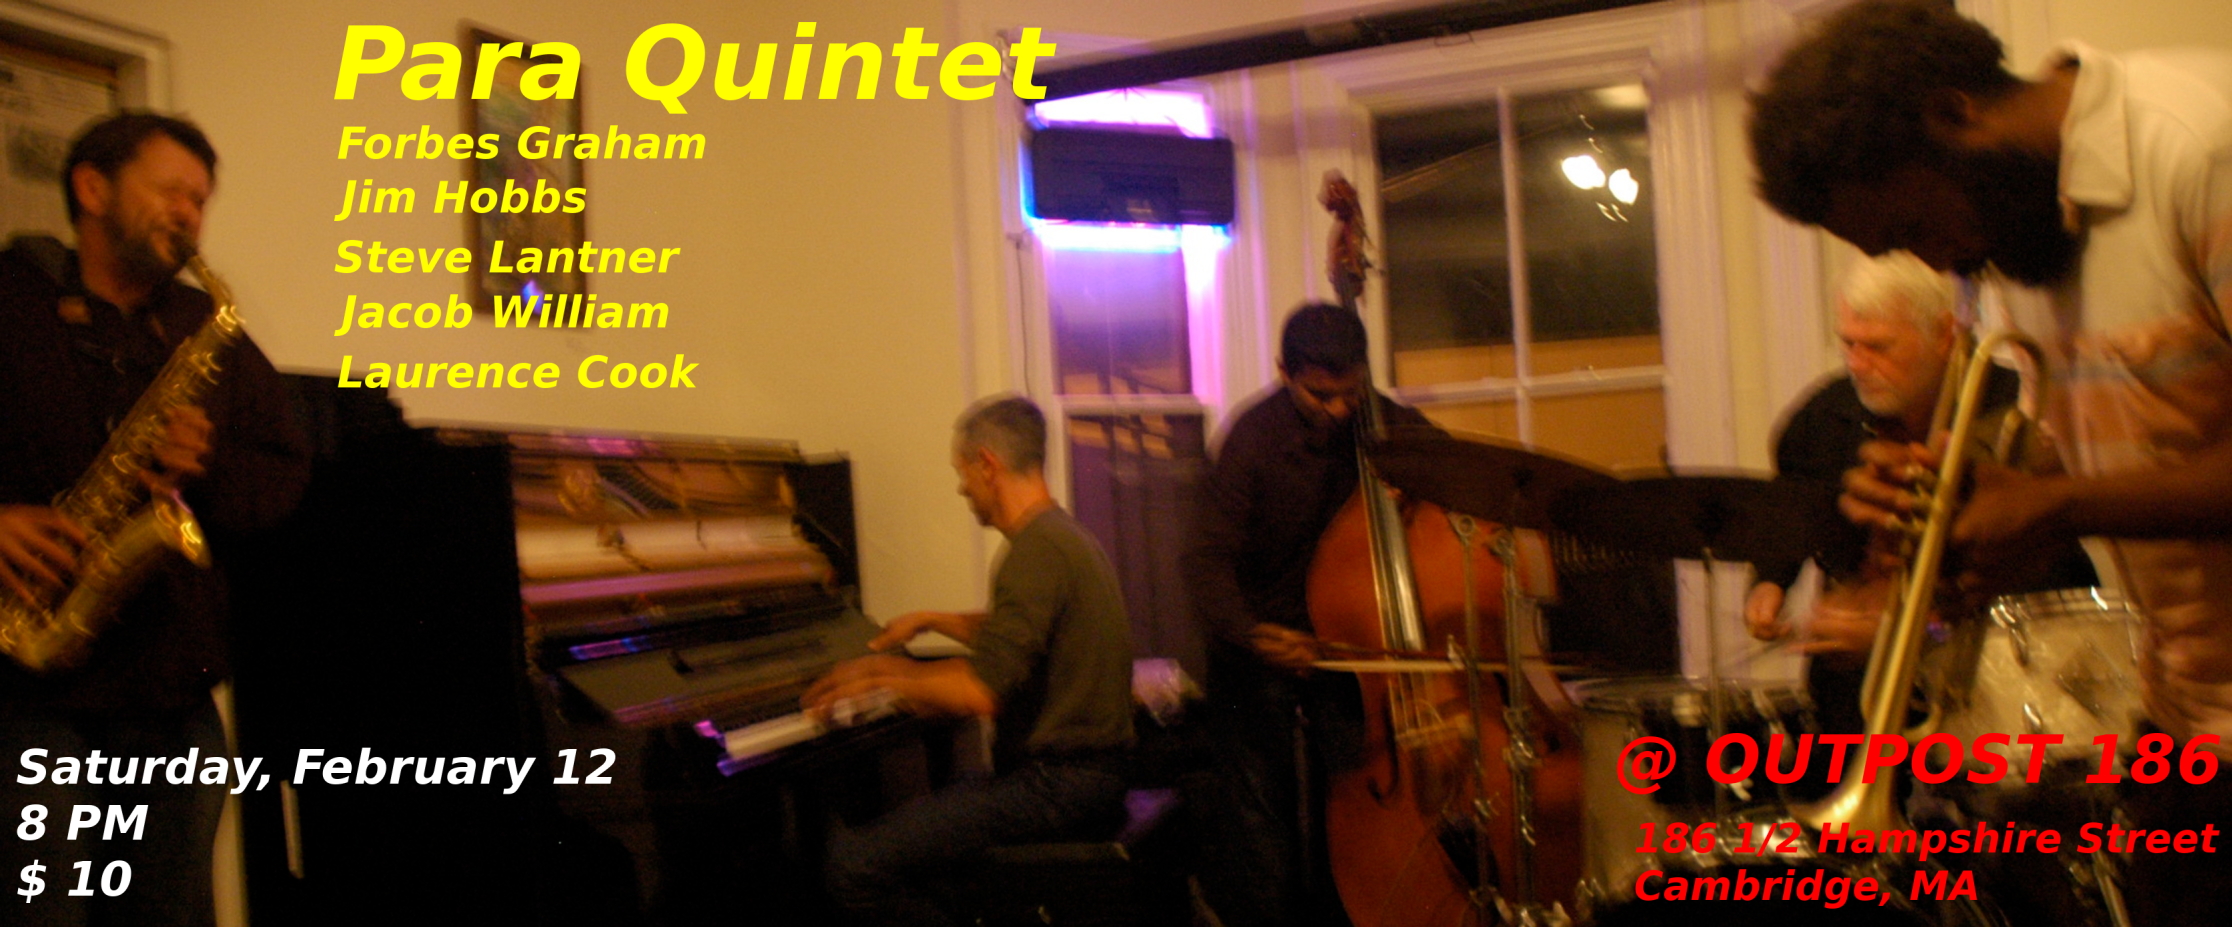 Para Quintet - Feb. 12, 2011